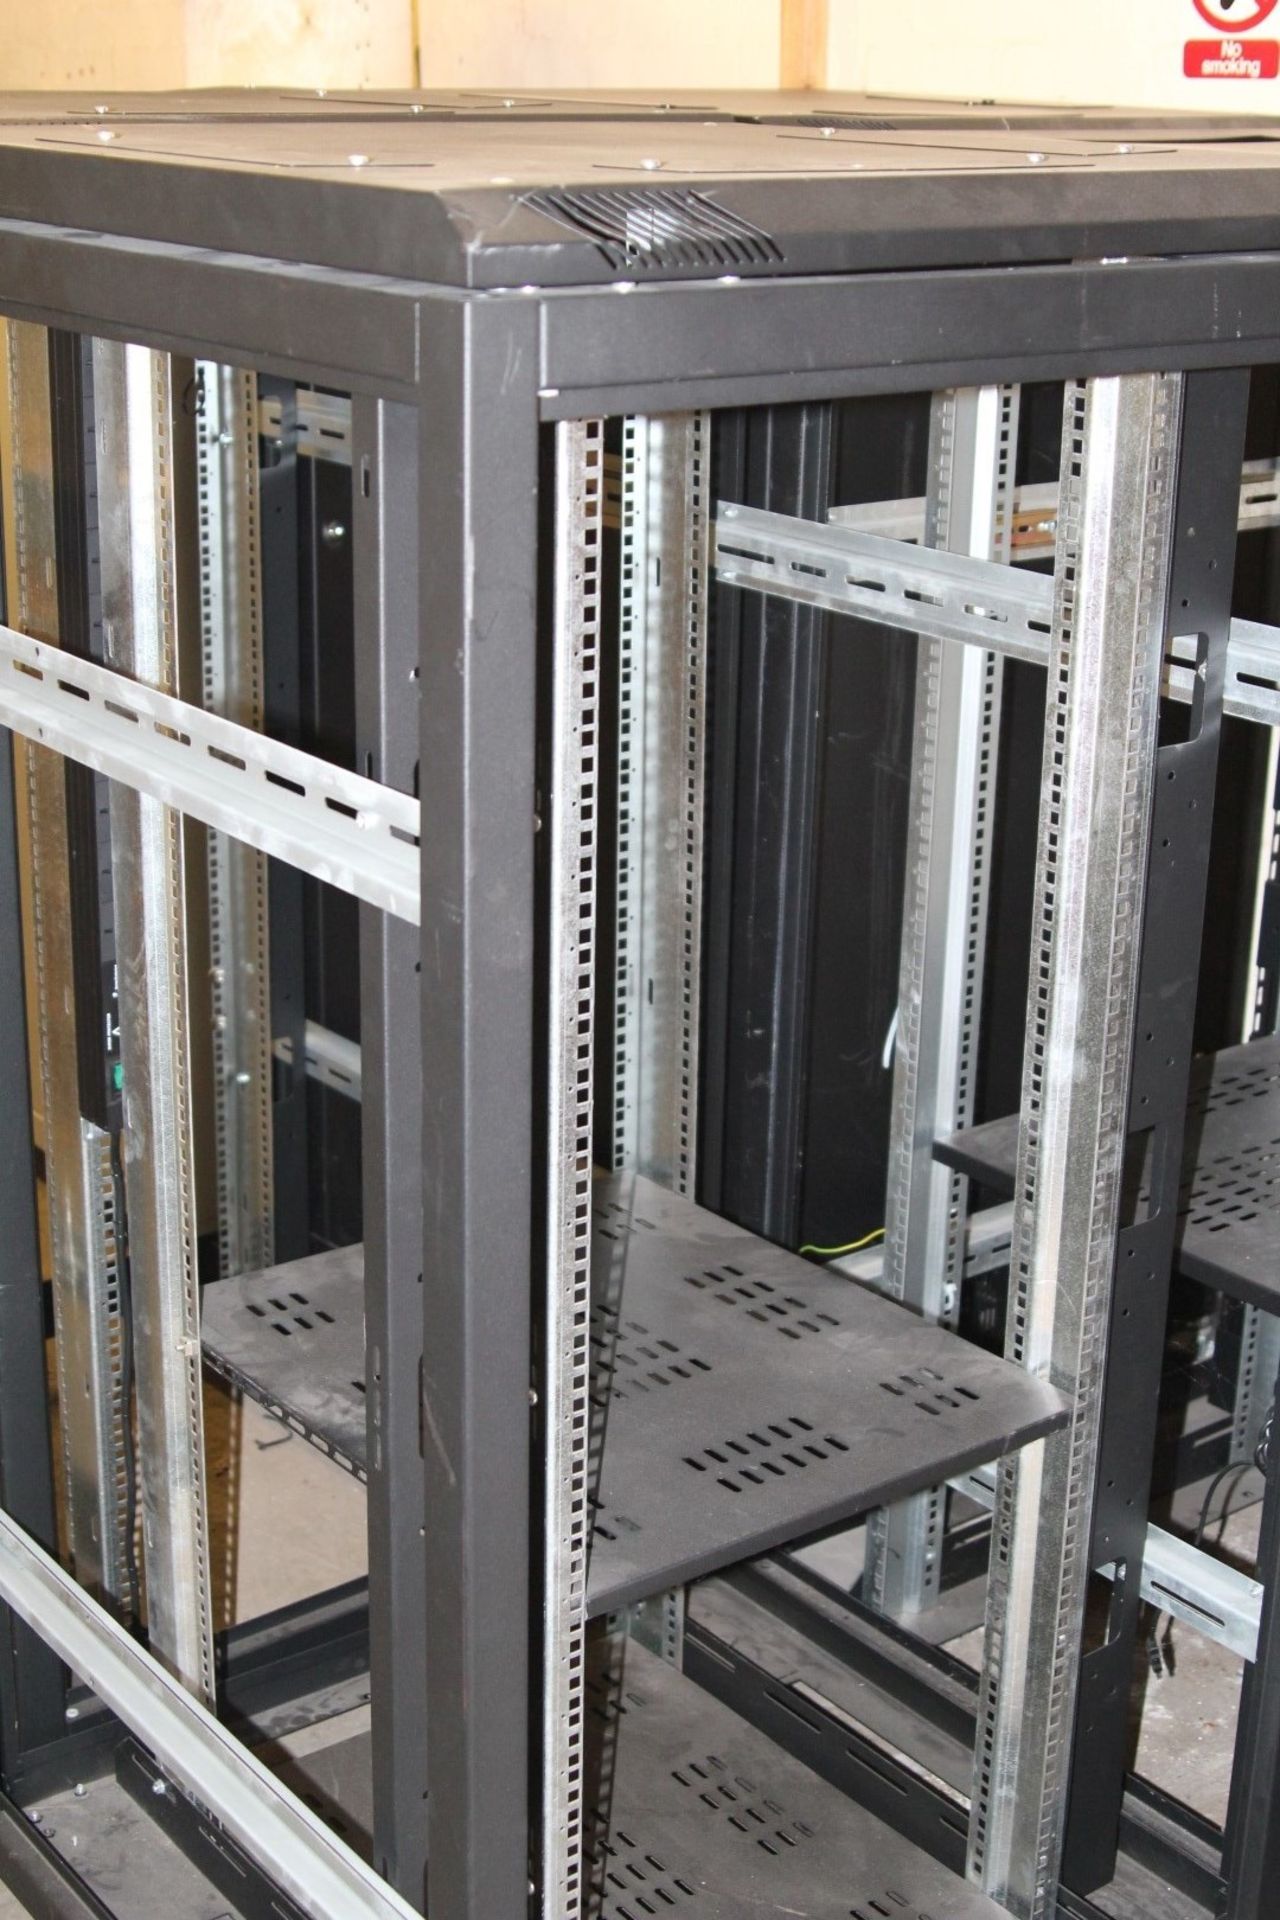 Huge Collection of IT Storage Equipment - Includes 14 Server Cabinets, Workstation Desks and - Image 20 of 72